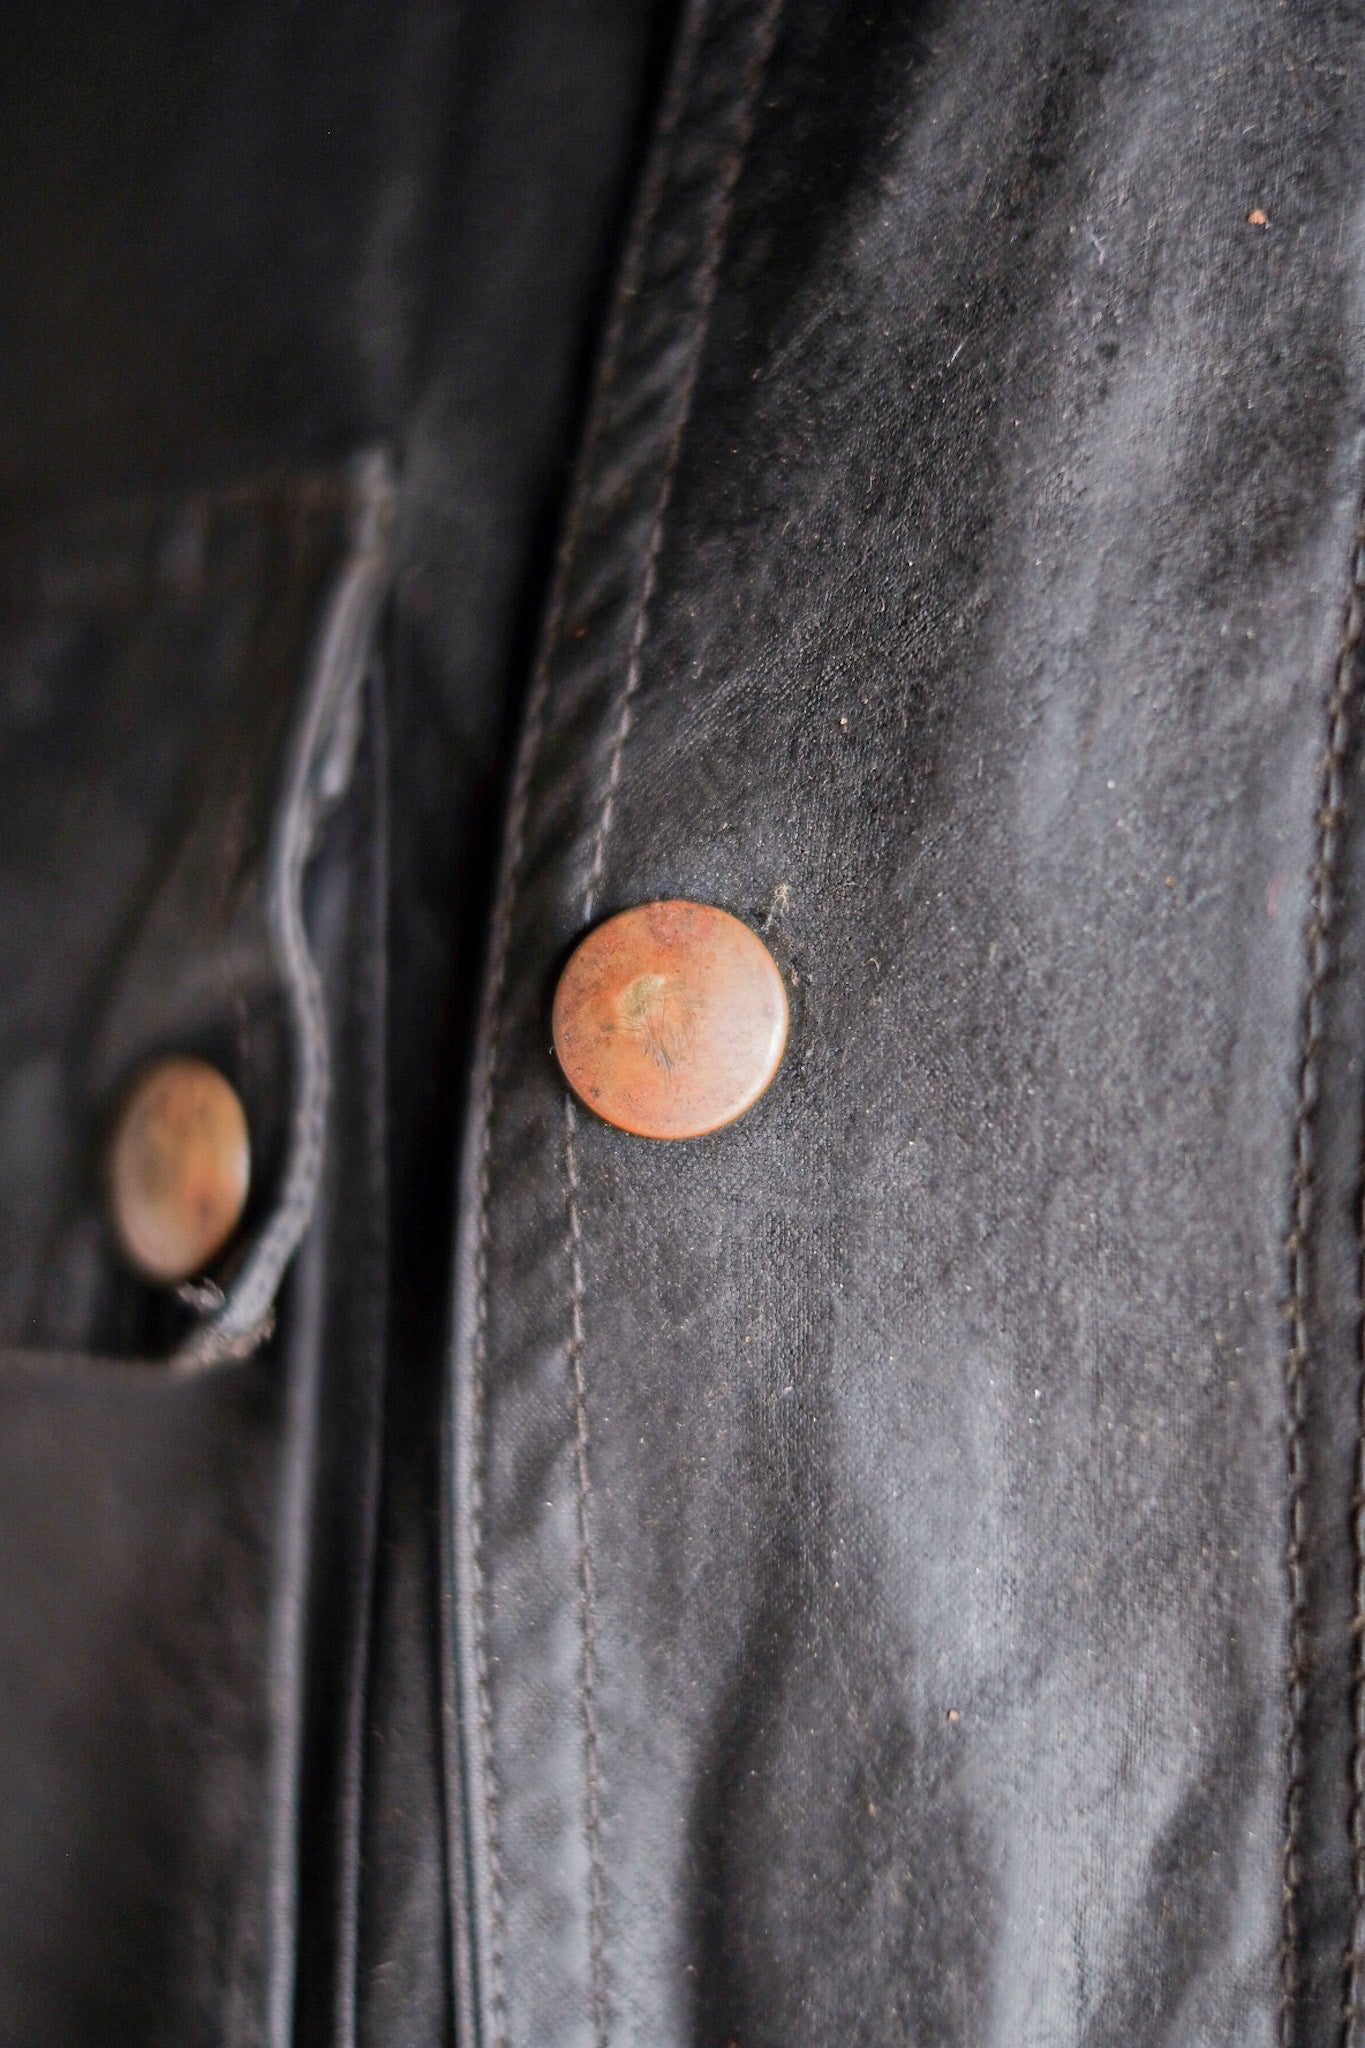 【~60's】Vintage Belstaff Waxed Jacket "TRIALMASTER" "Red Tag"